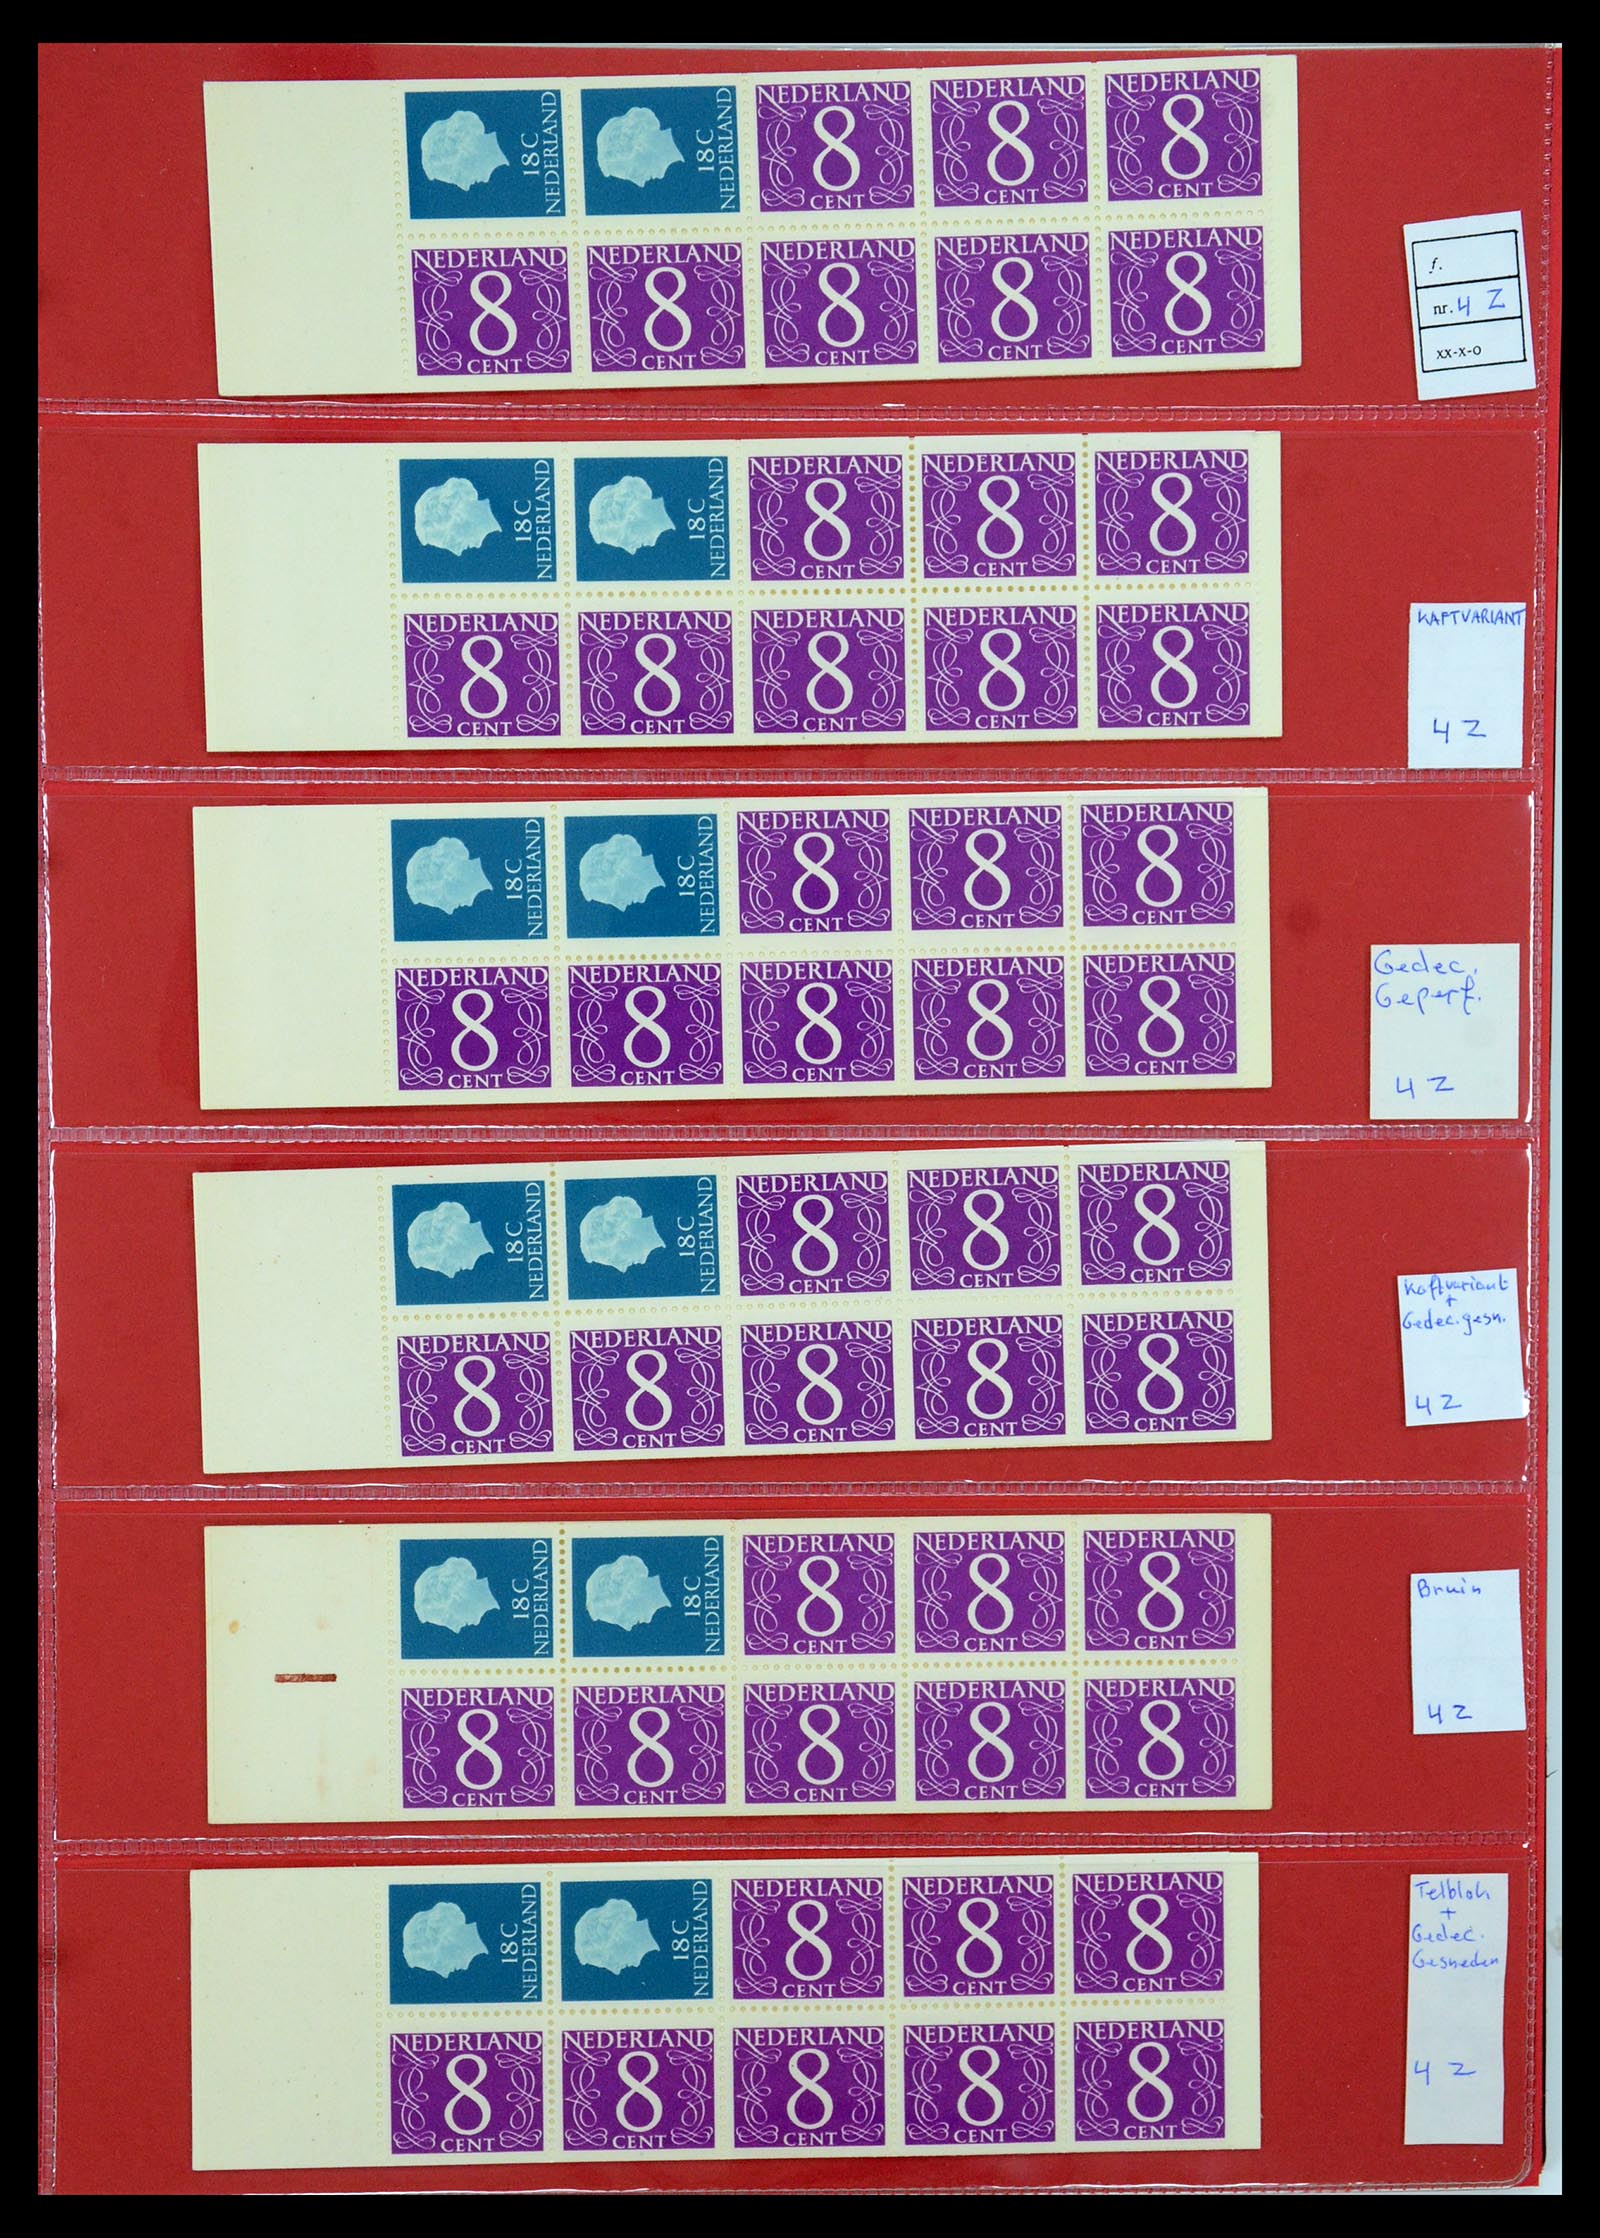 35705 029 - Stamp Collection 35705 Netherlands stamp booklets 1964-2000.